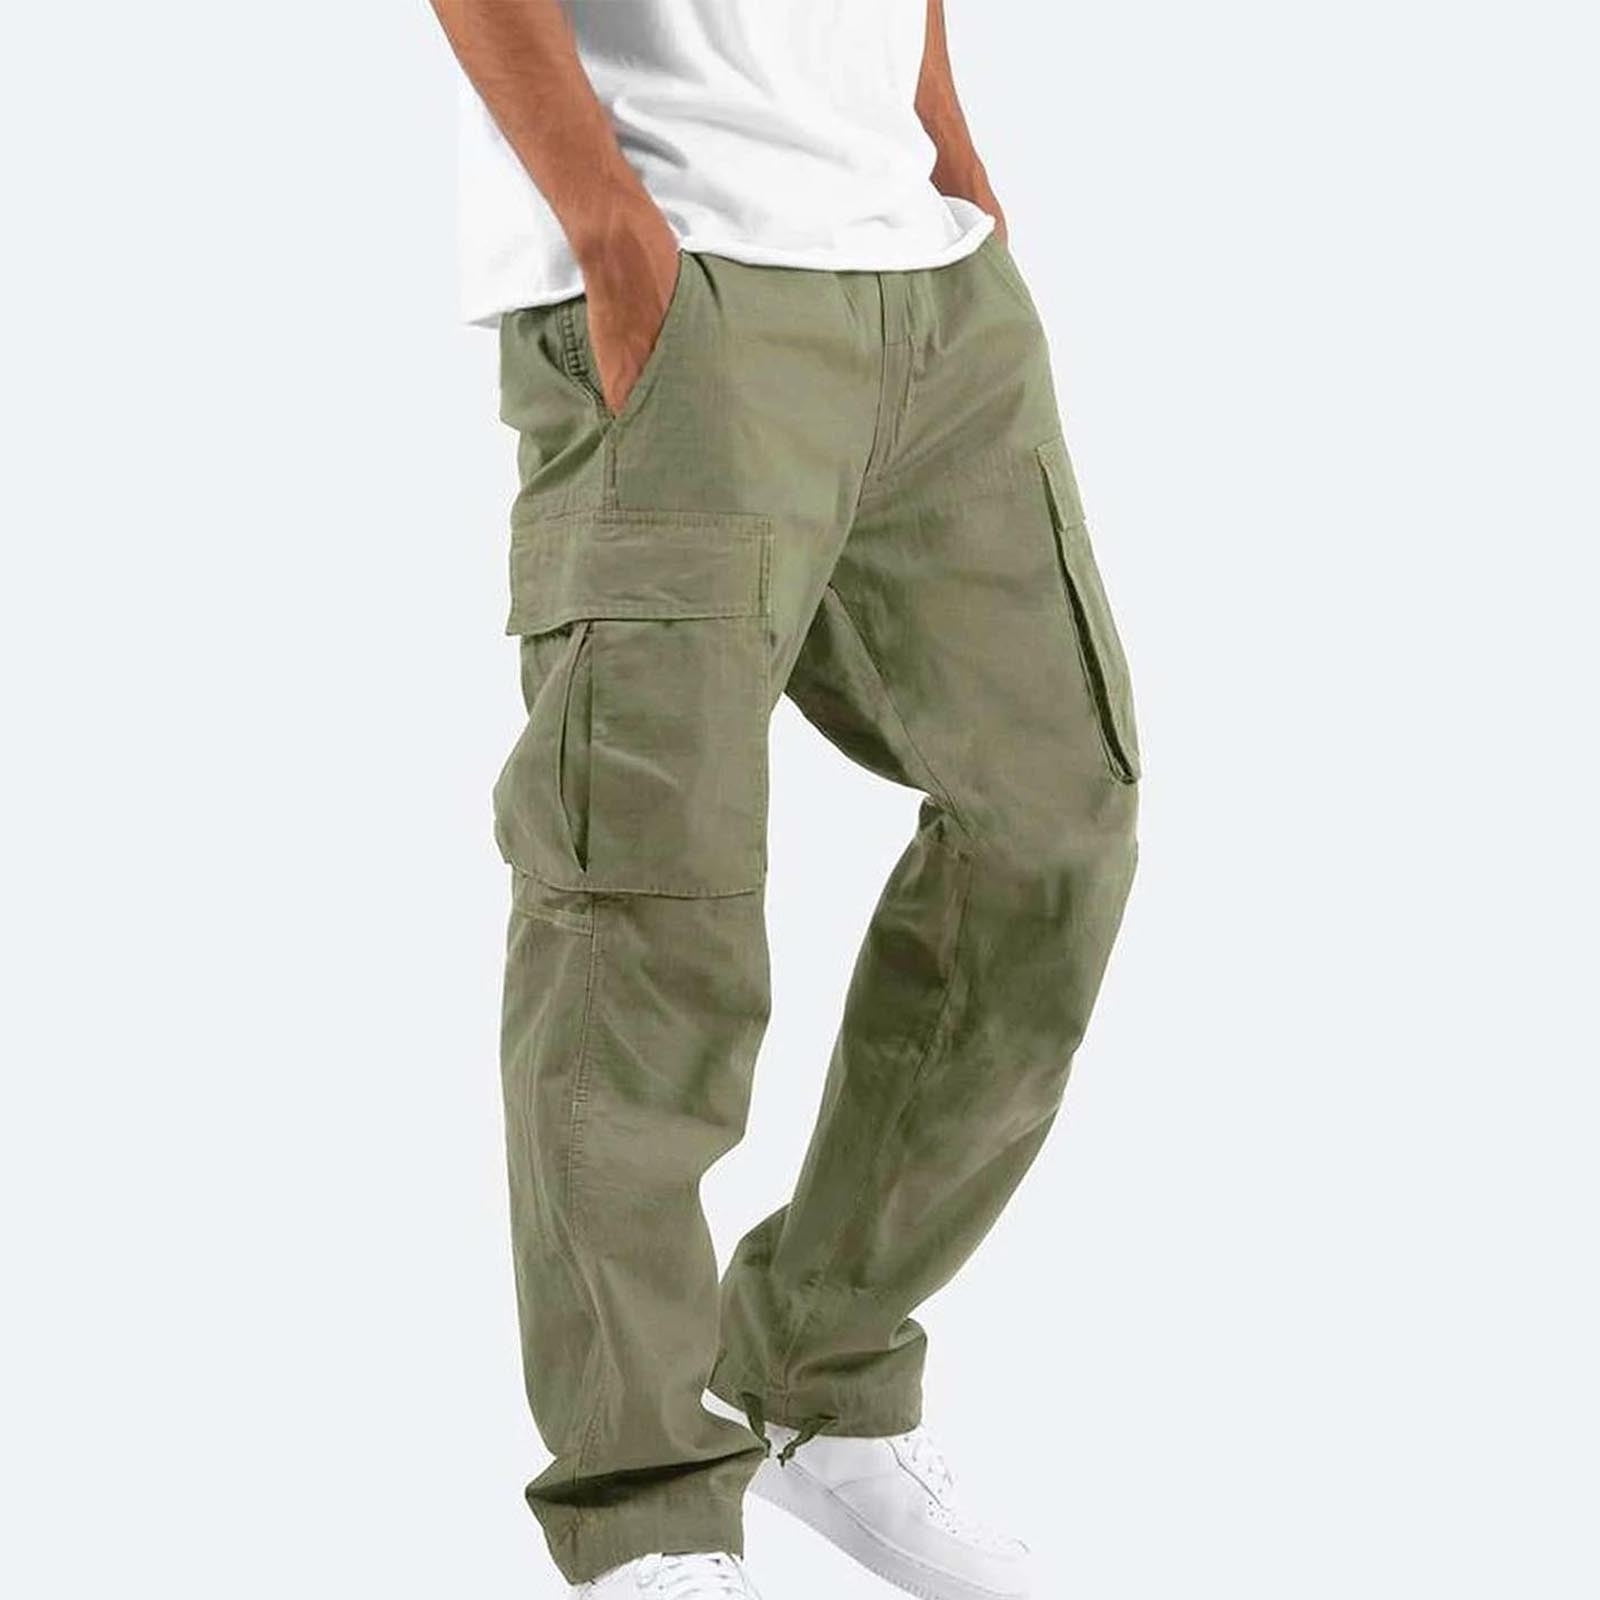 Men casual cargo pants overalls elastic waist pocket Sport cotton trousers  L-6XL | eBay